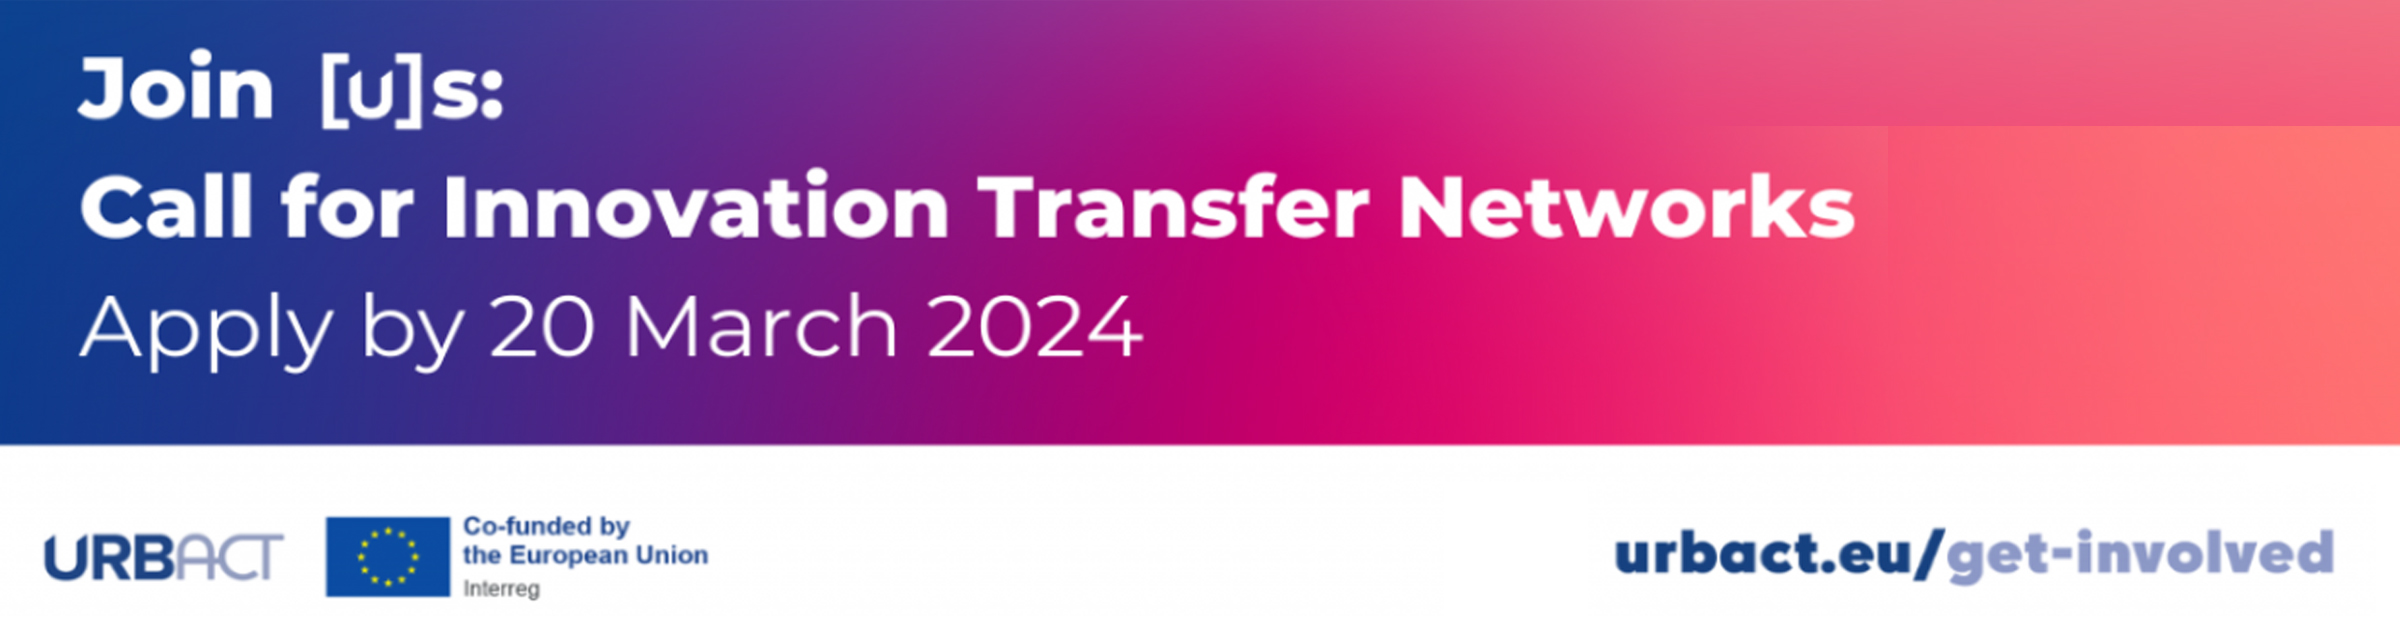 Call for Innovation Transfer Networks